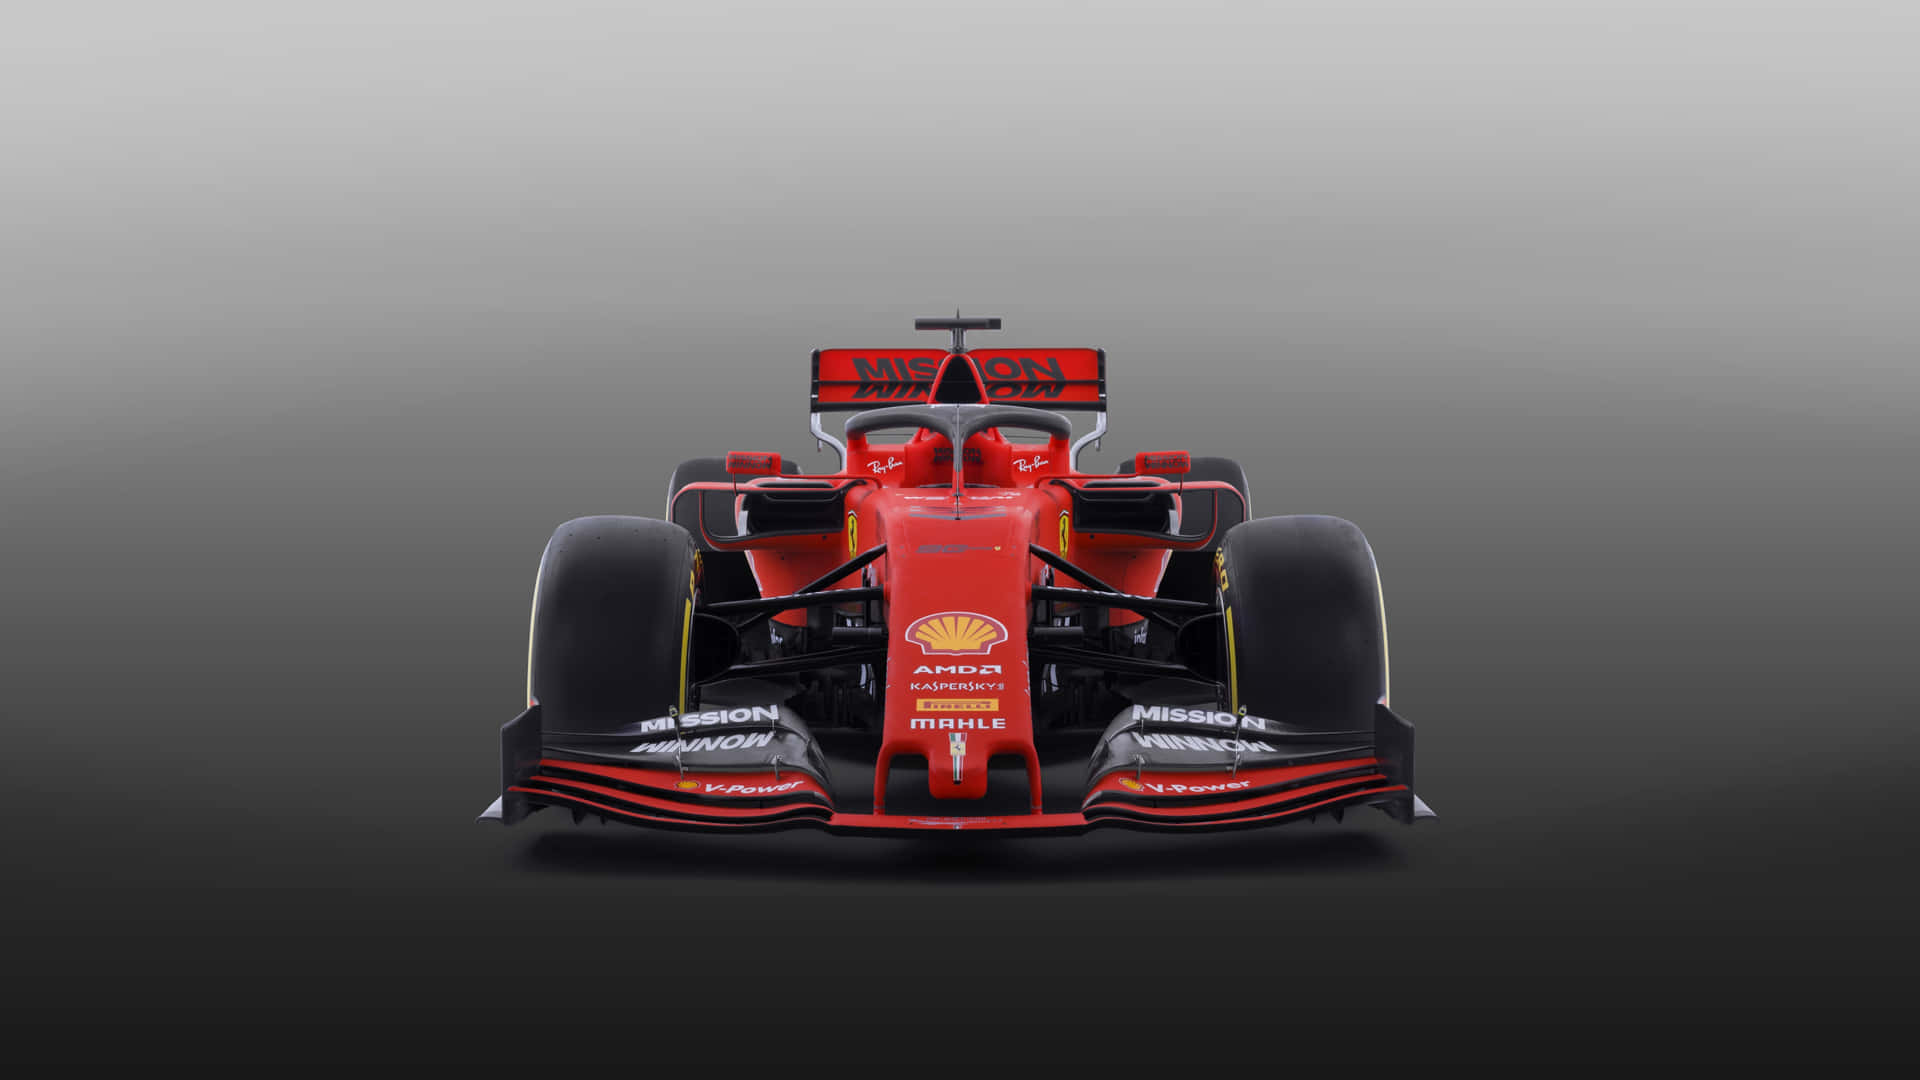 Ferrari F1 Car In Red On A Grey Background Wallpaper